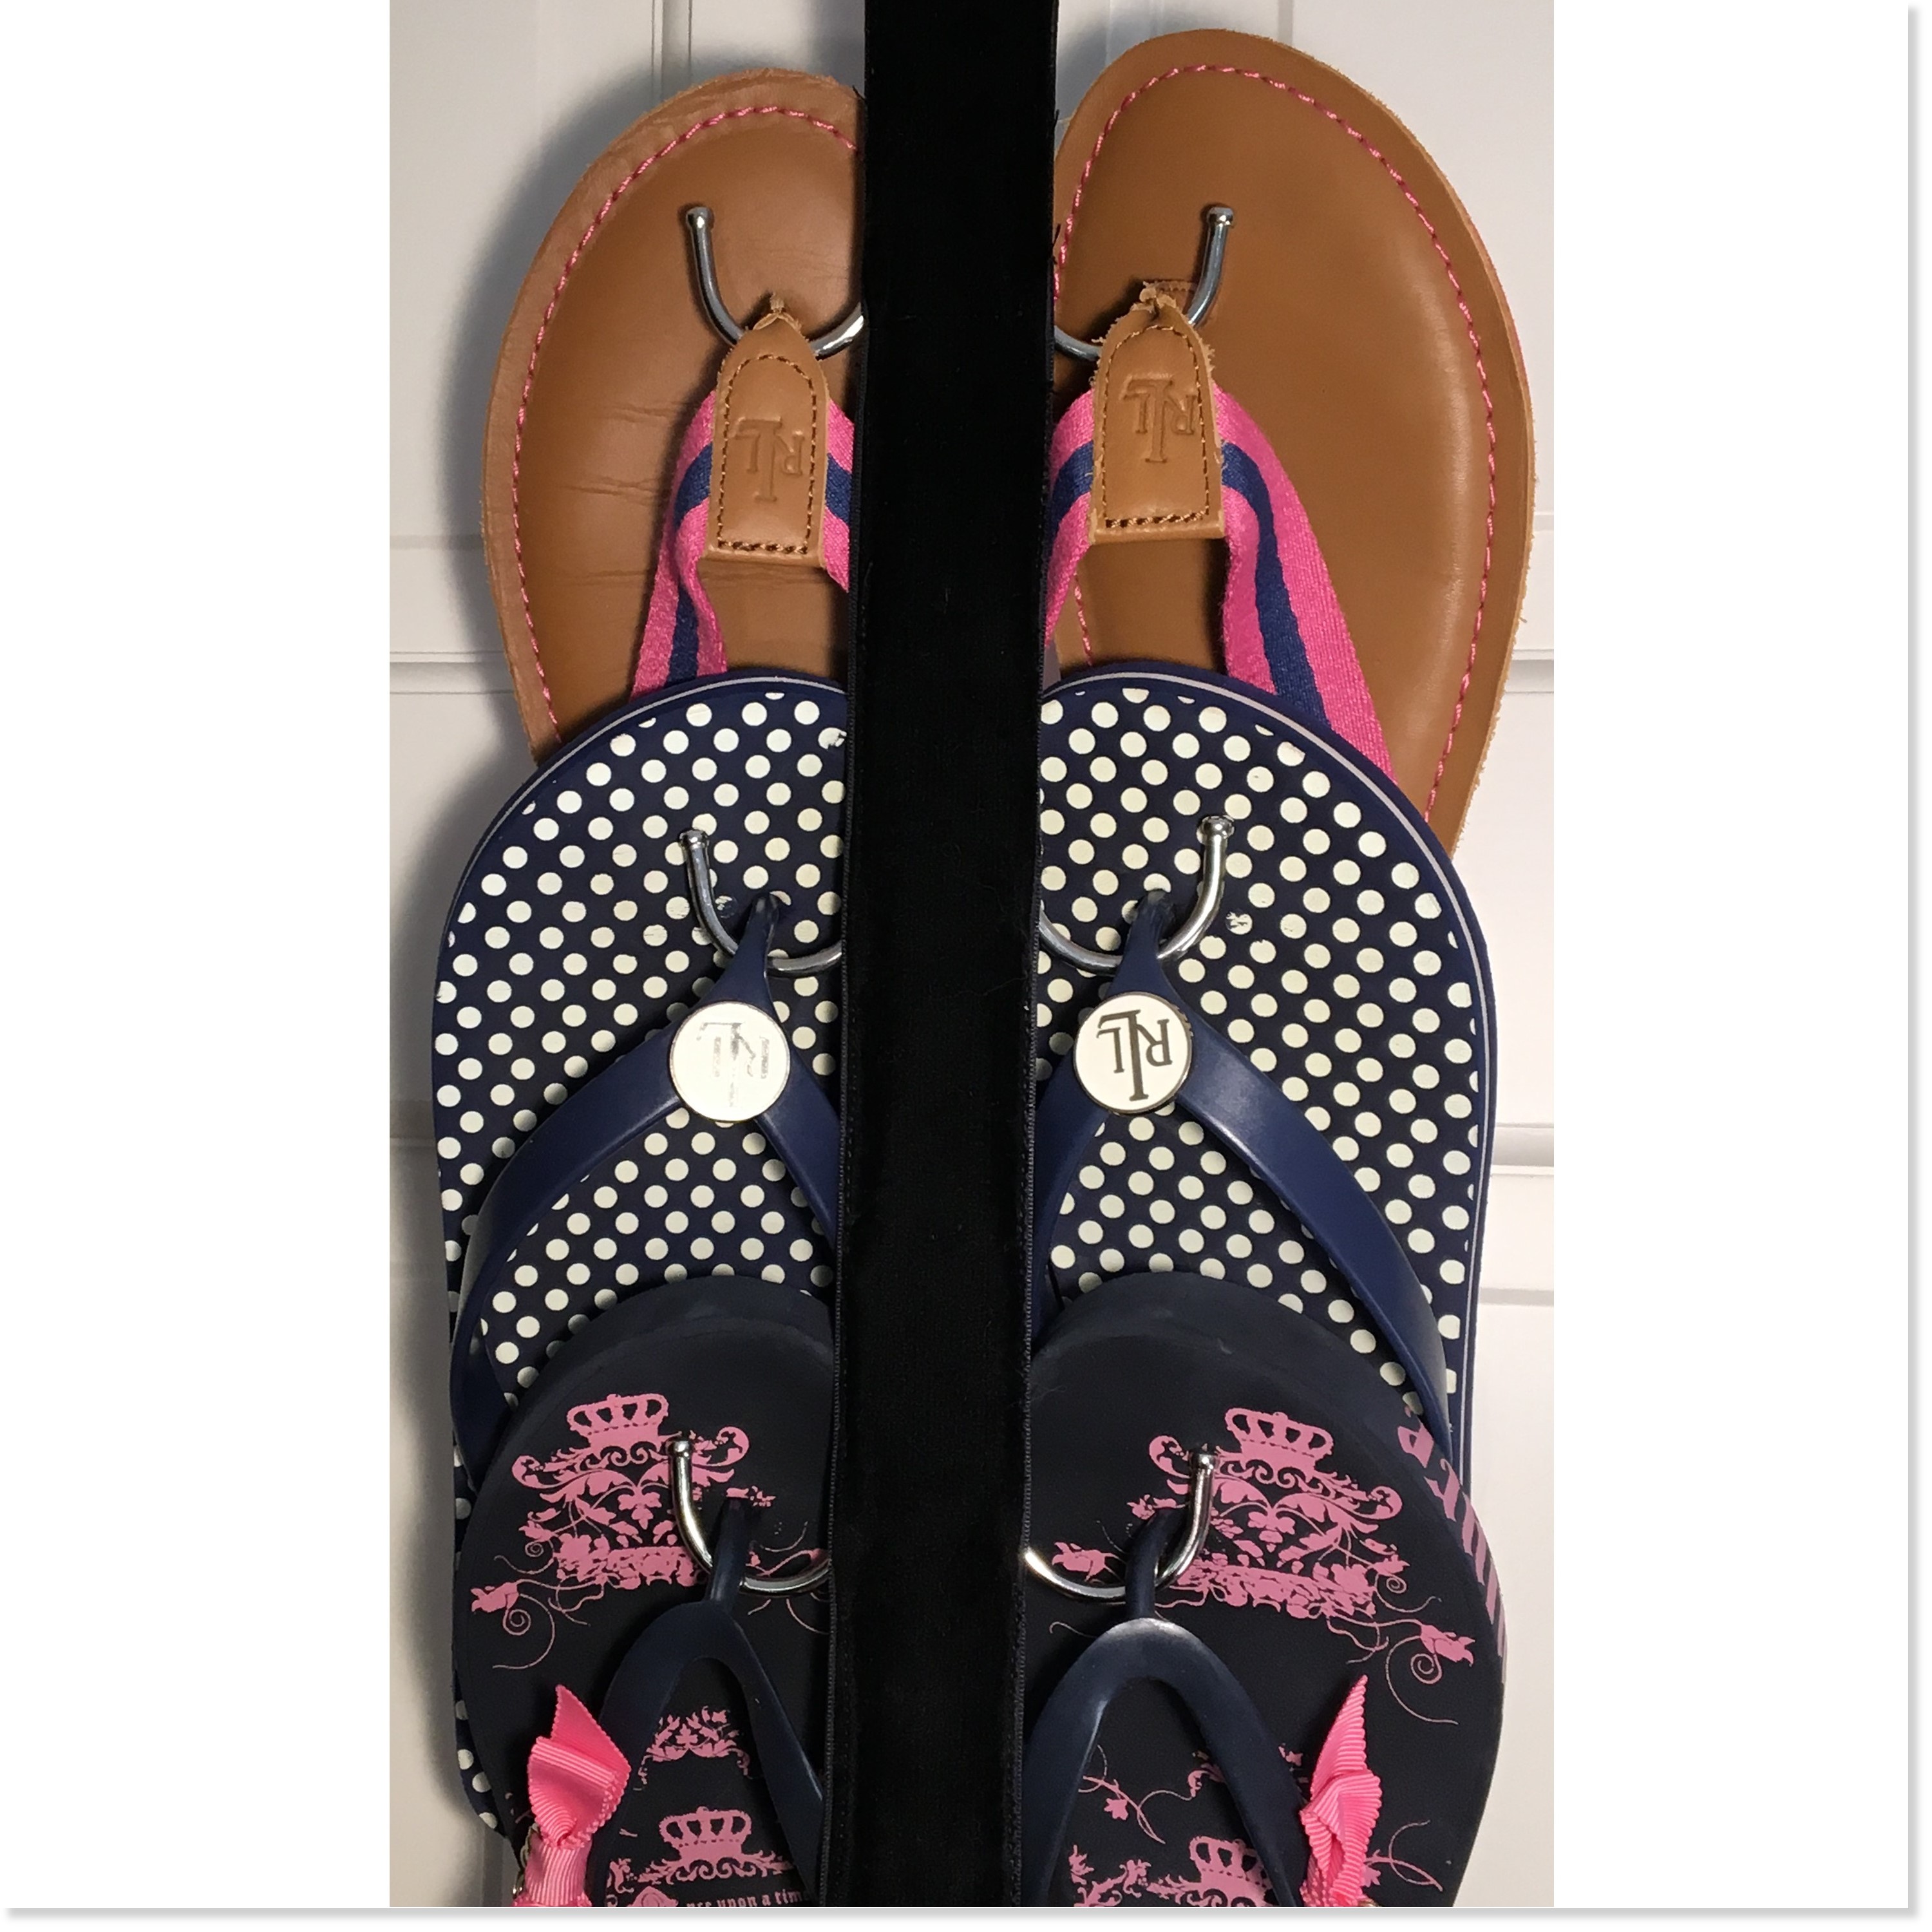 Flip Flop and Sandal Hanger By Boottique - image 3 of 5